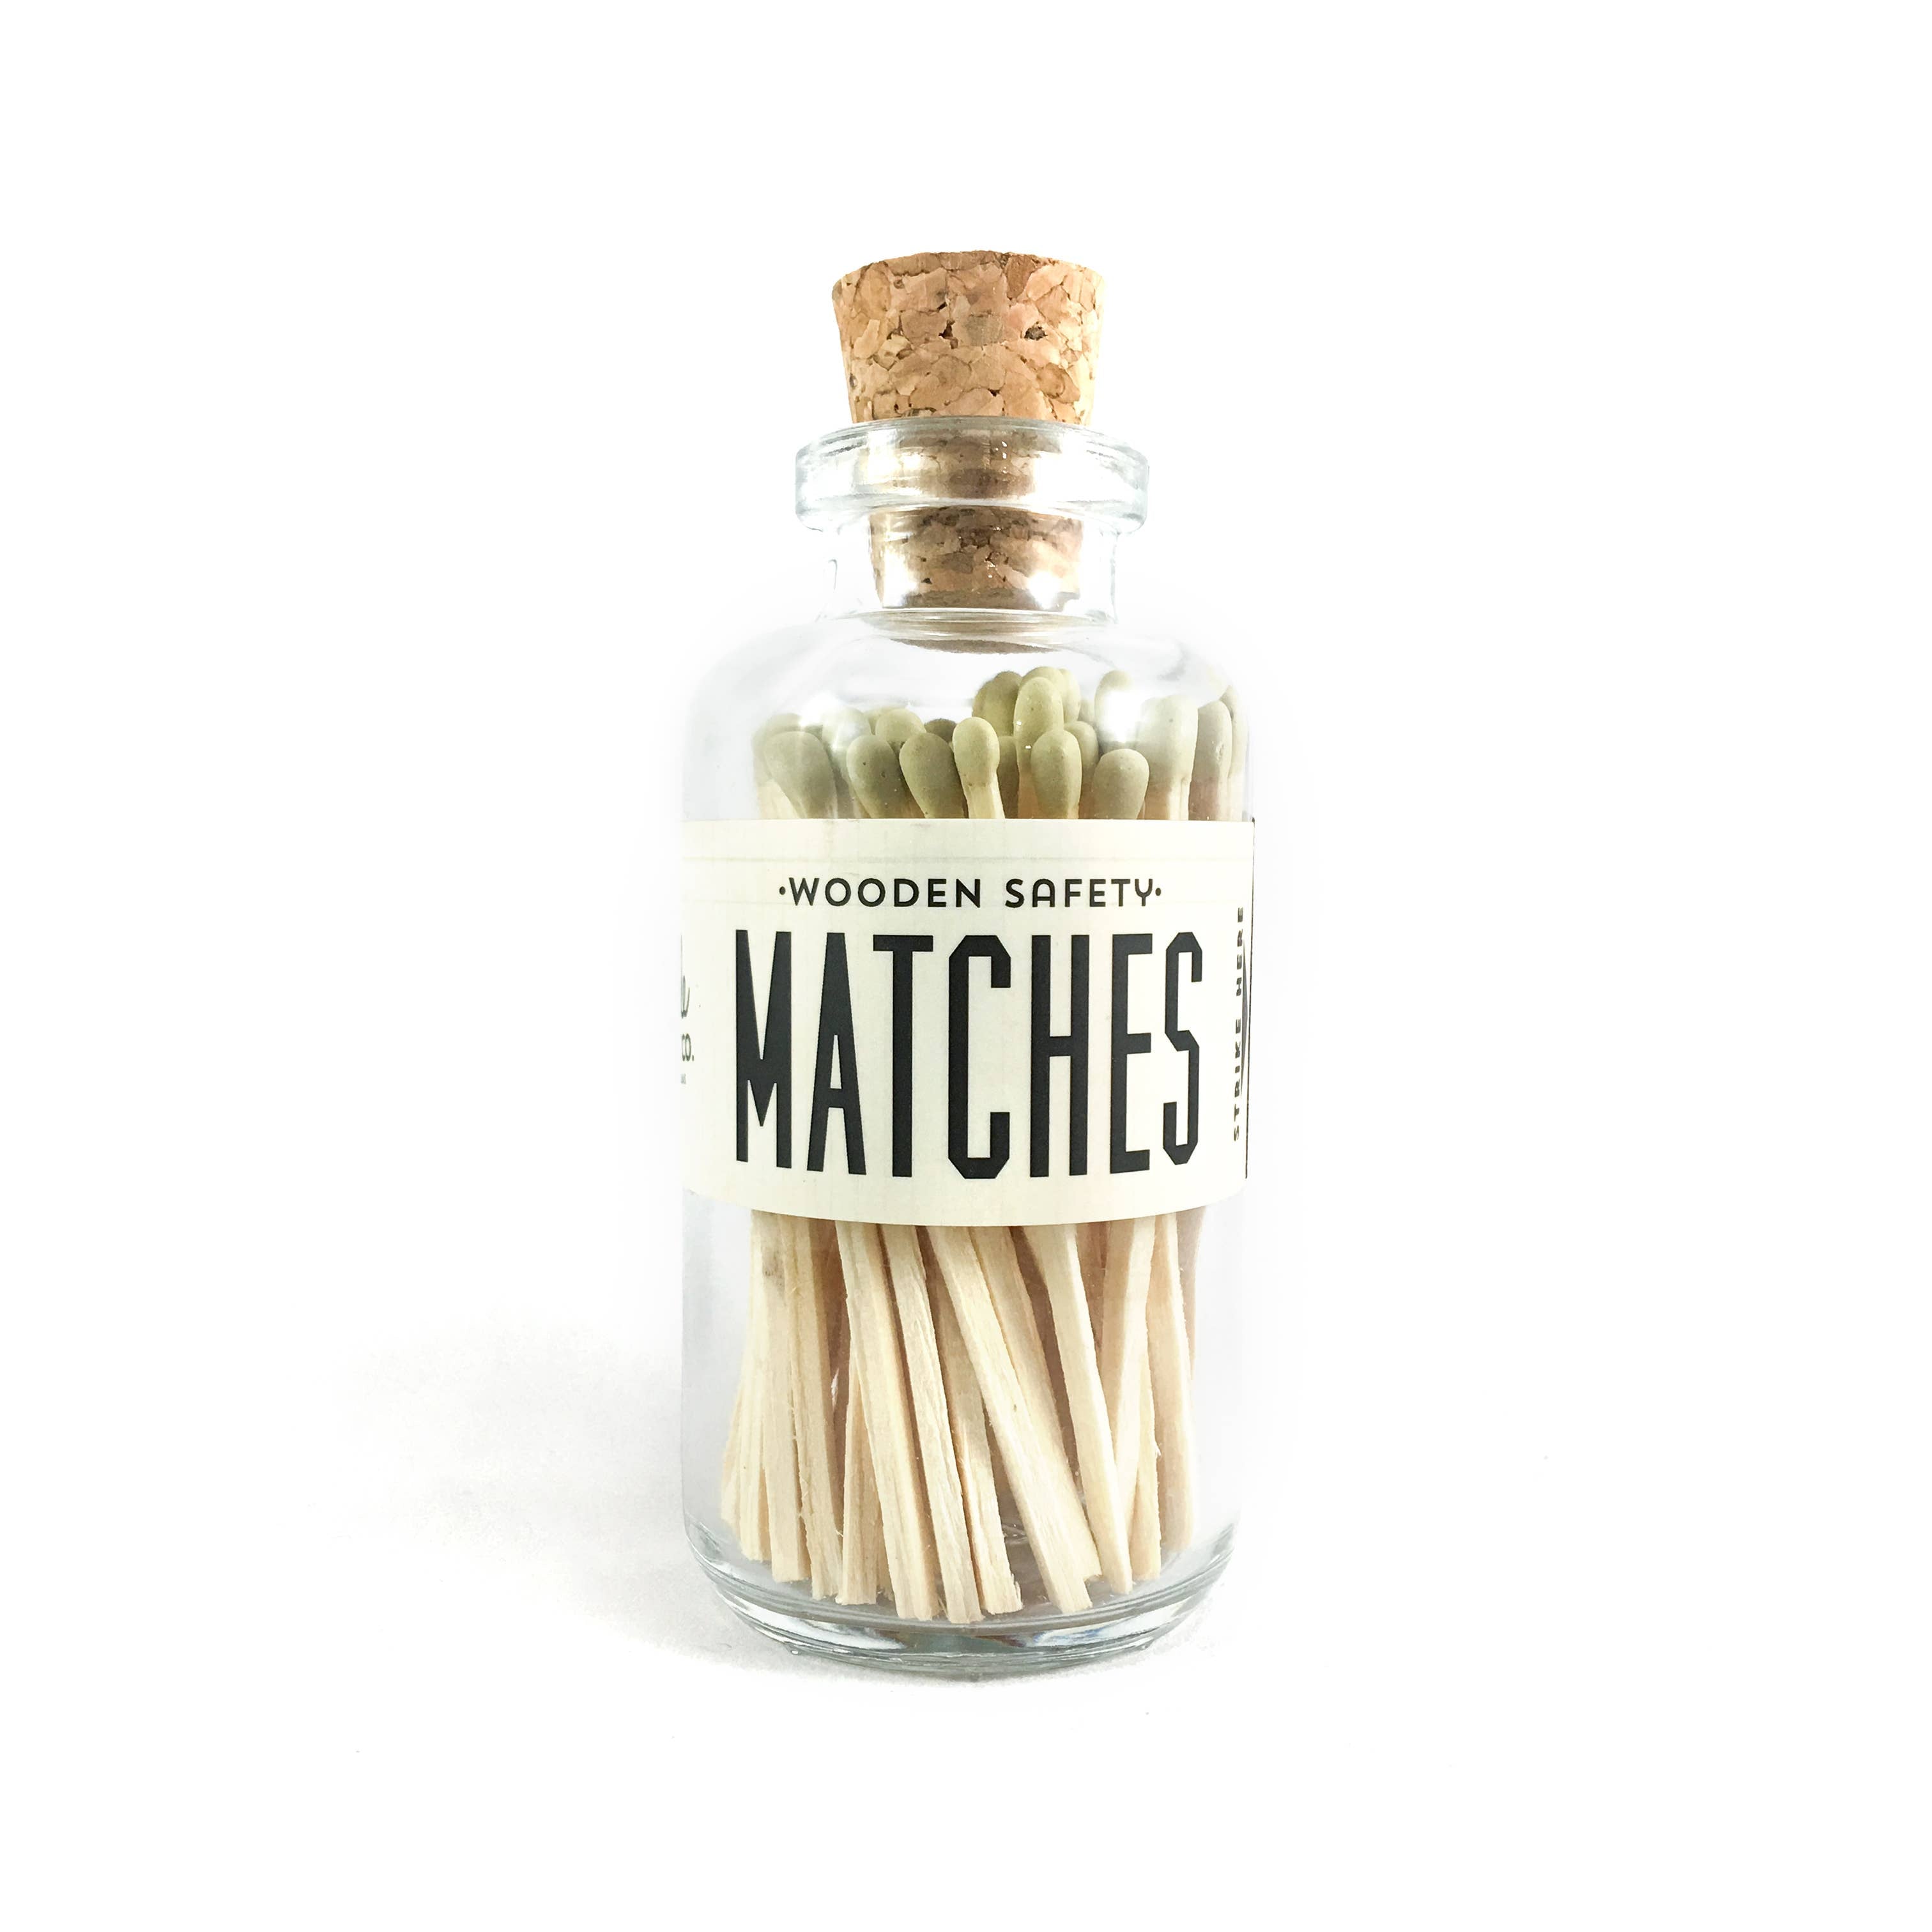 Small Jar of Matches - Proper